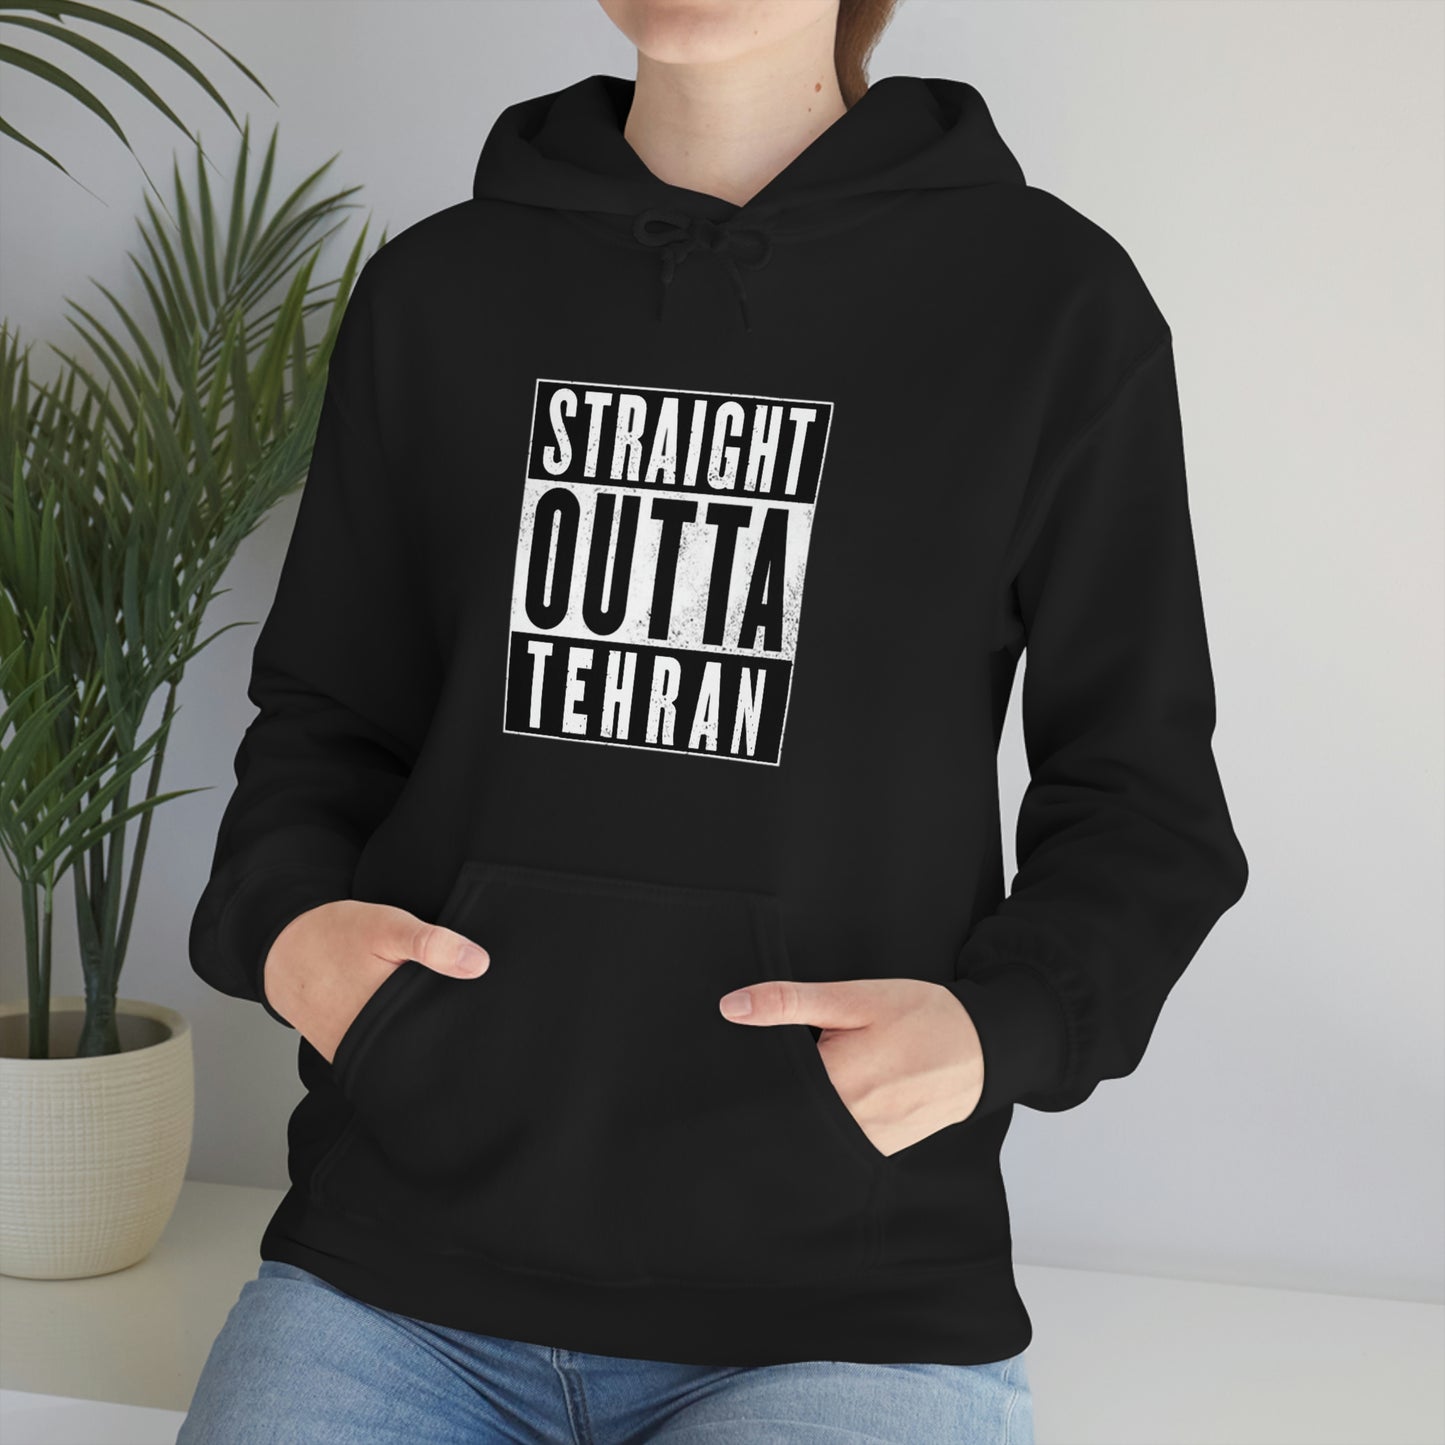 STRAIGHT OUTTA TEHRAN Hooded Sweatshirt